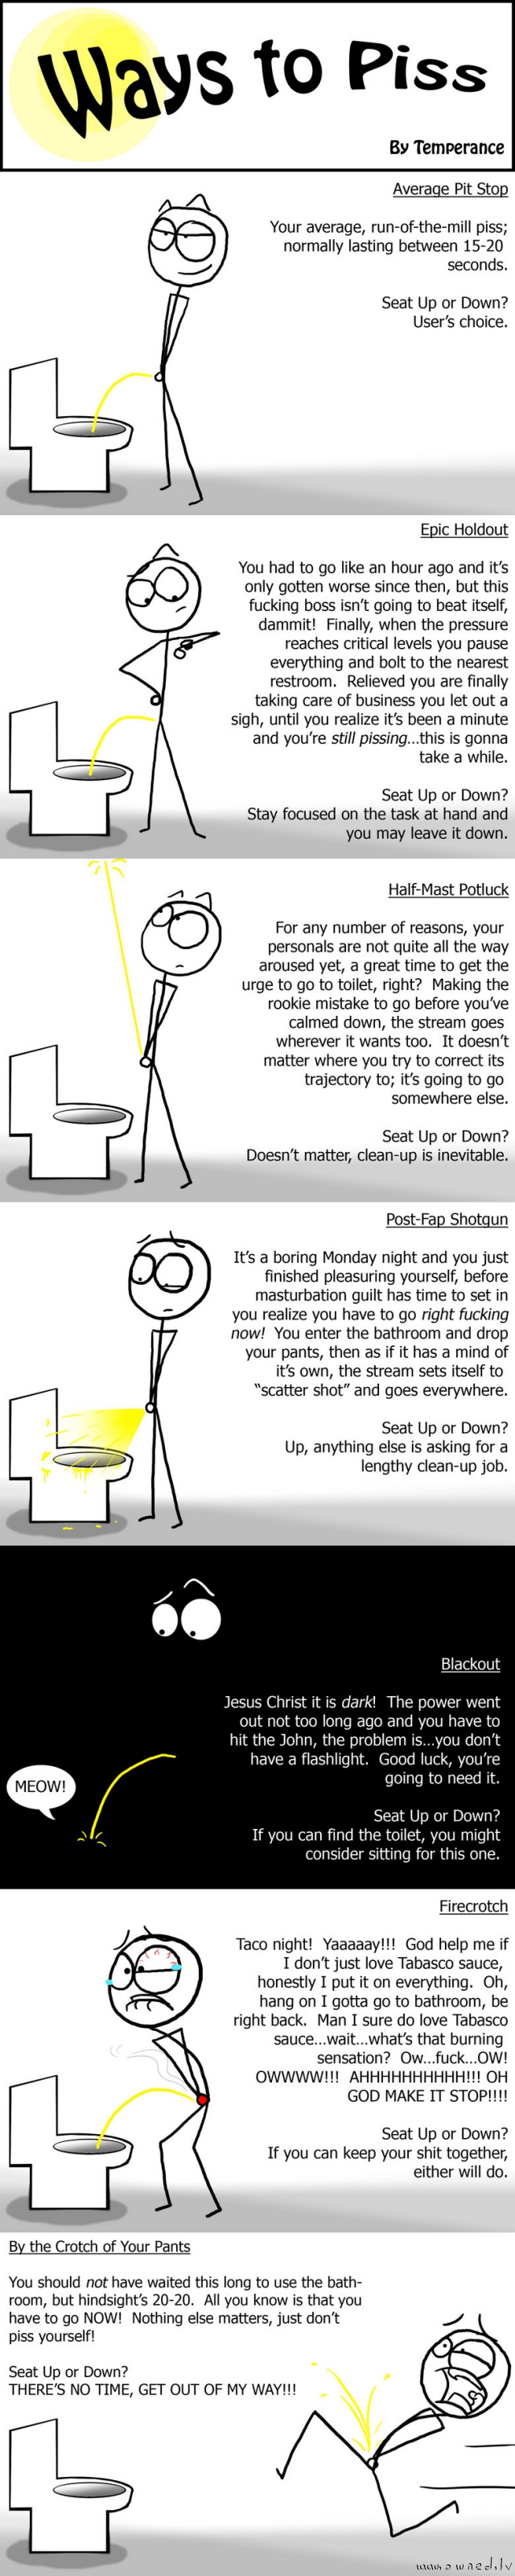 Ways to piss